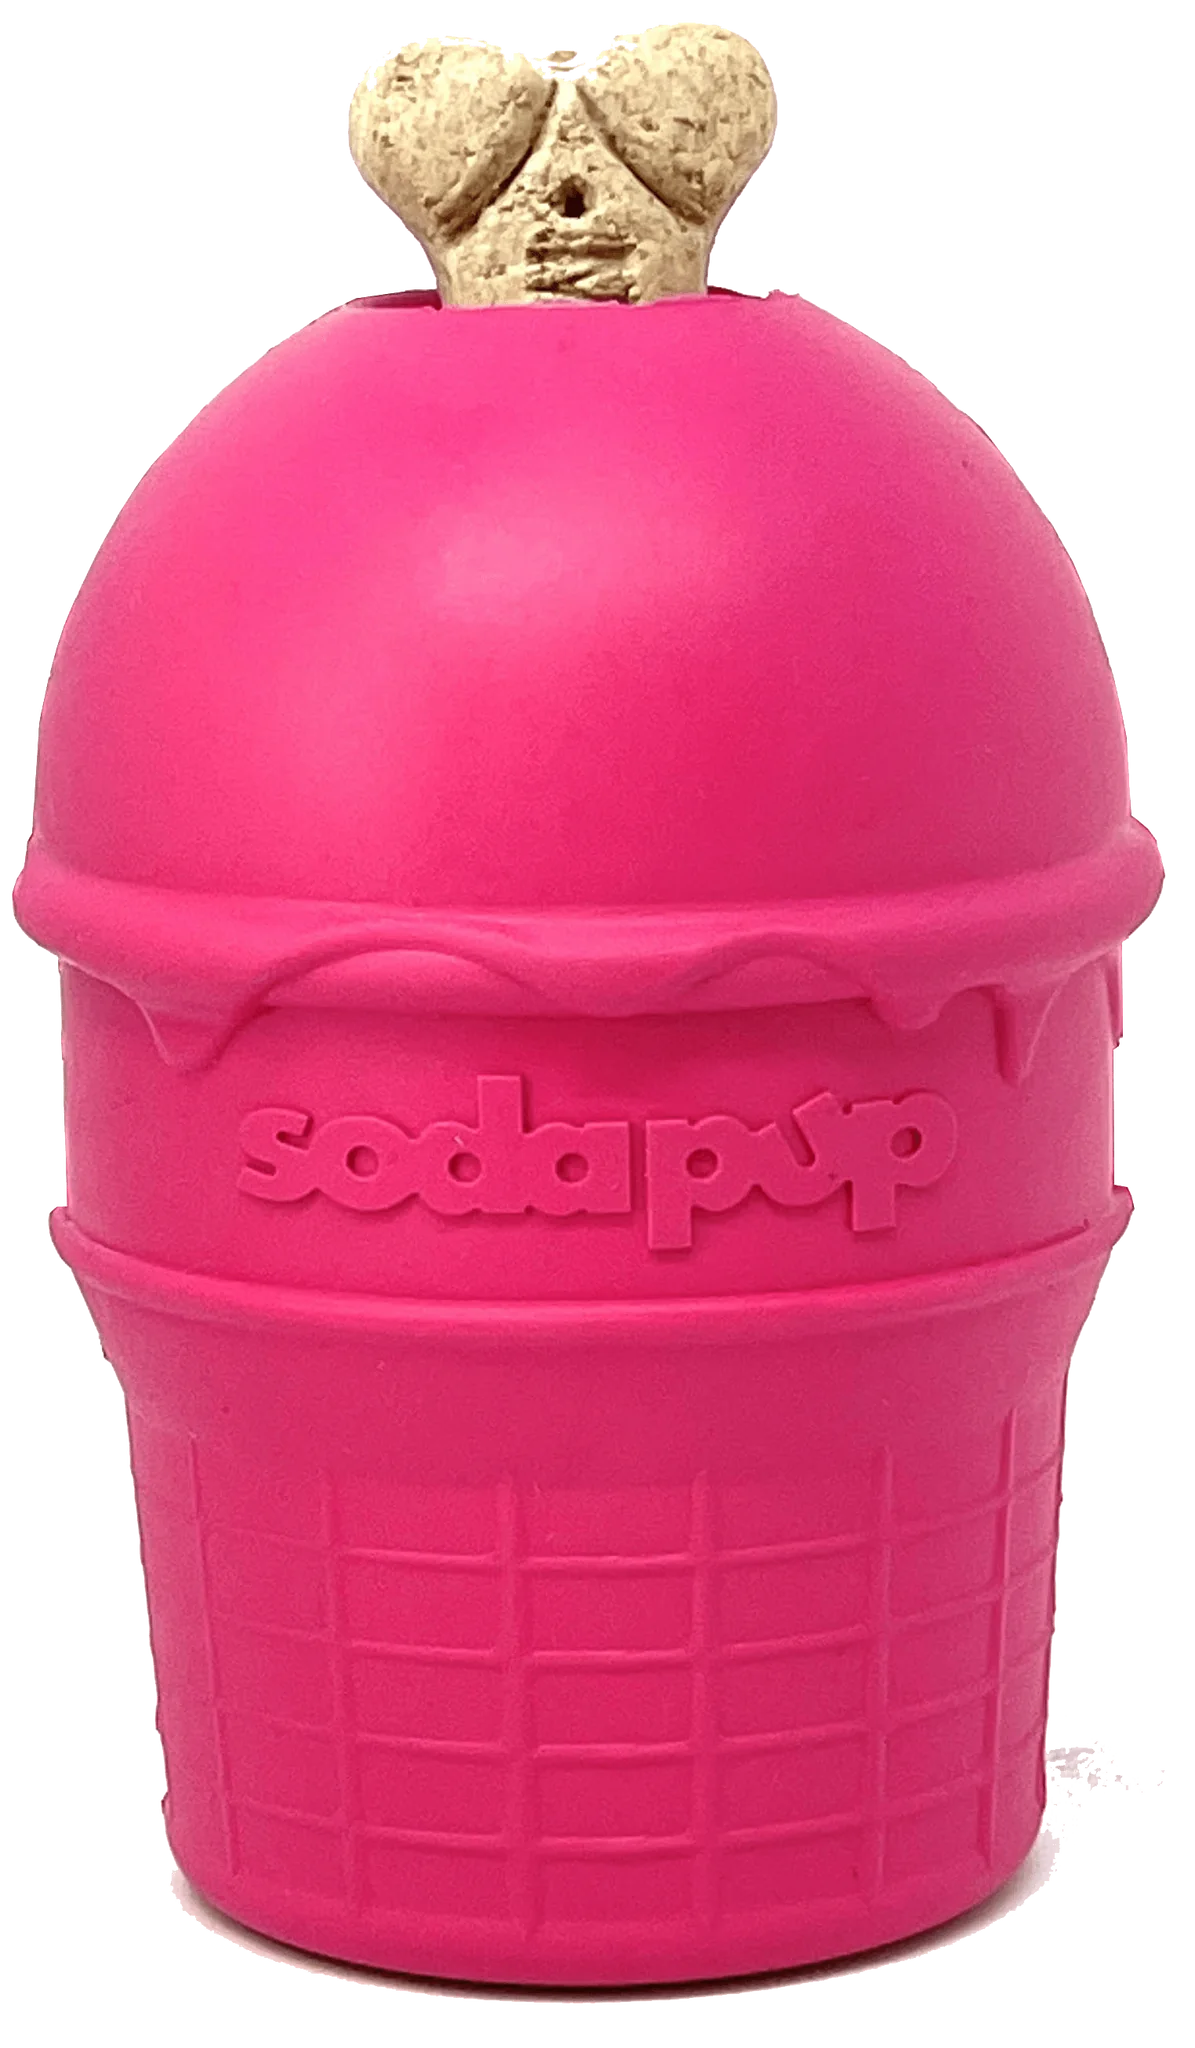 Sodapup Ice Cream Cone Chew Toy and Treat Dispenser- Medium